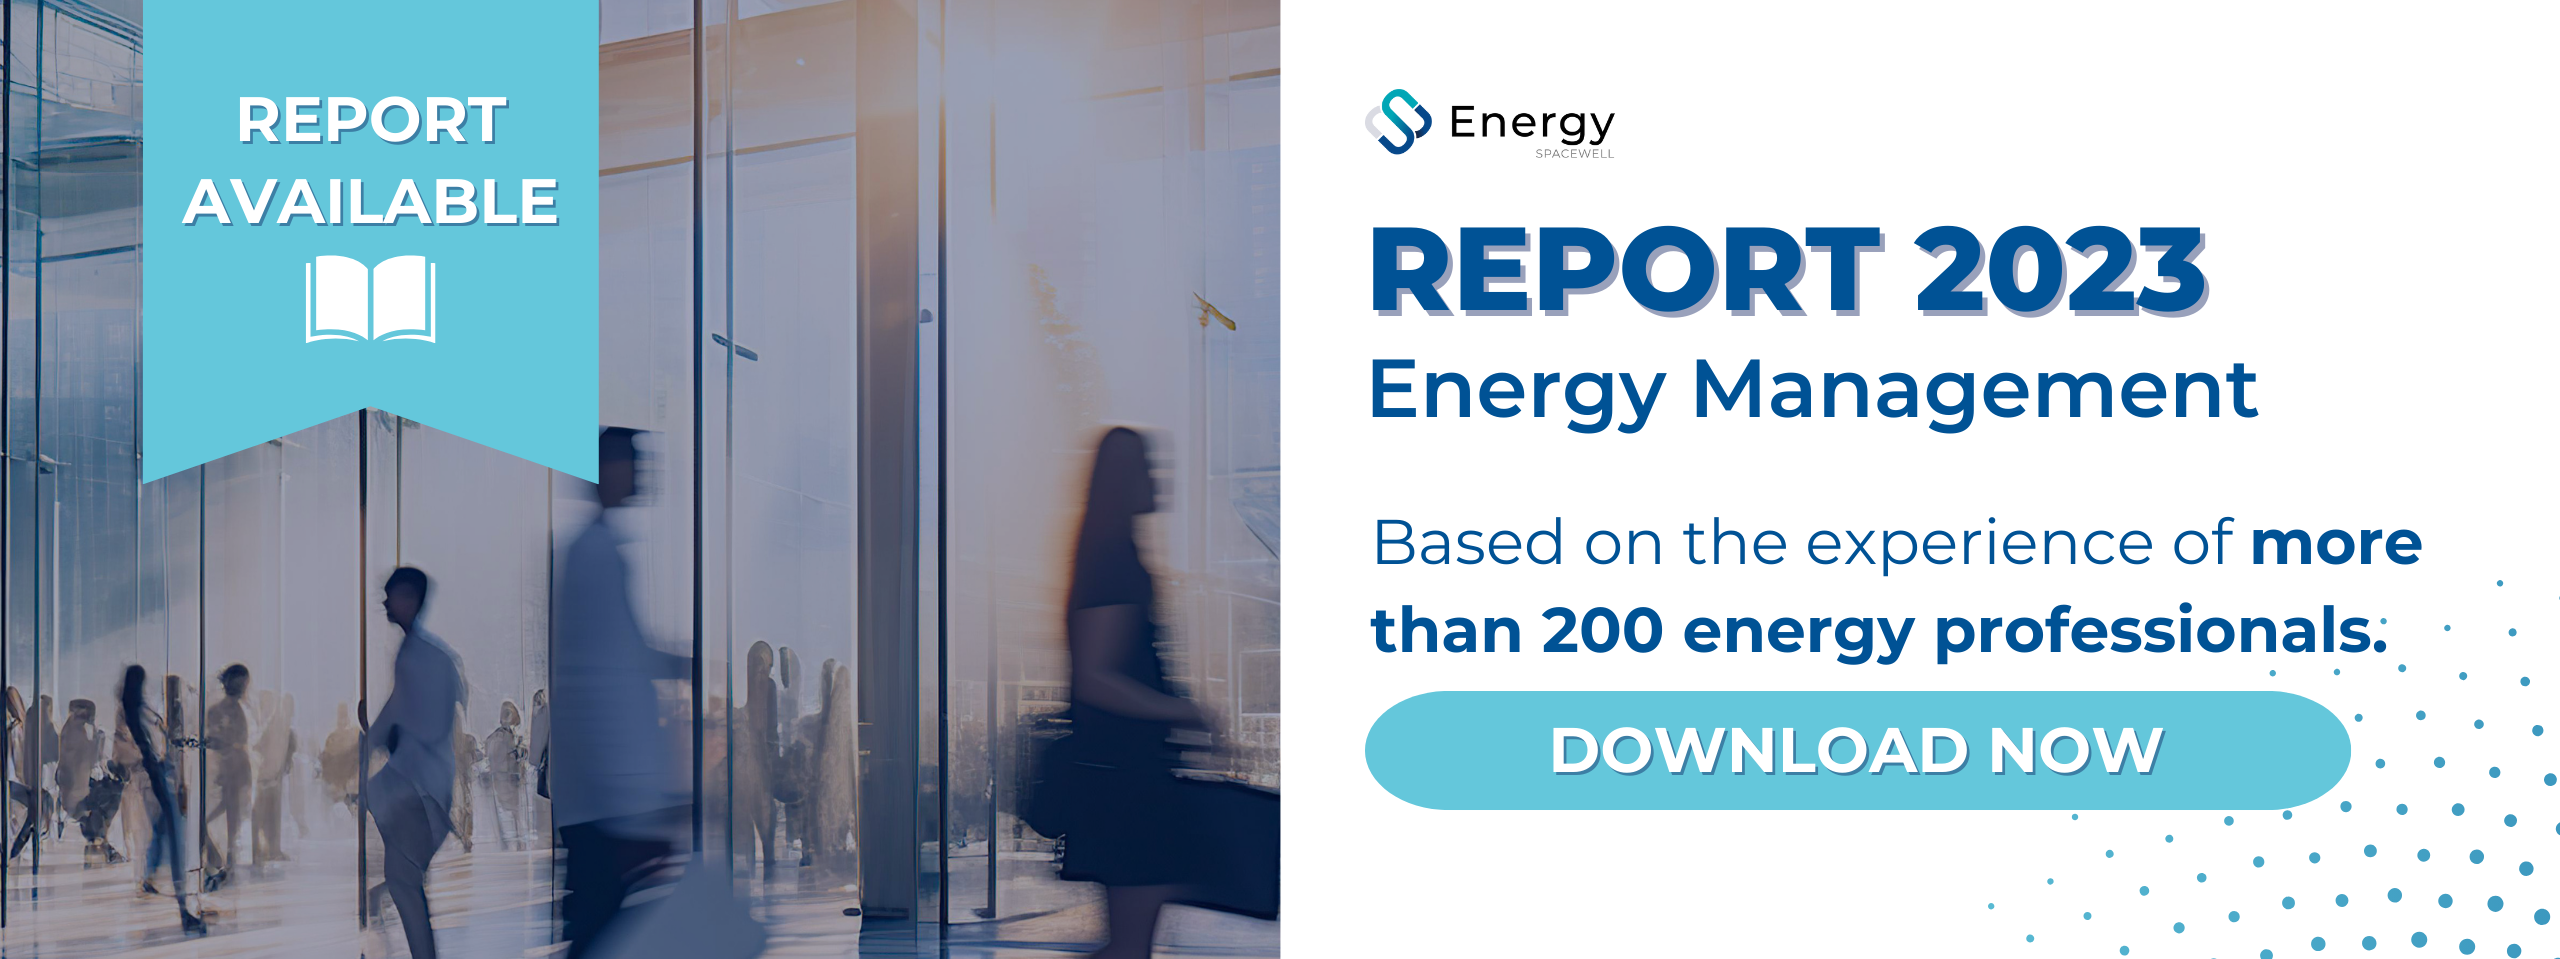 Energy Management Report 2024